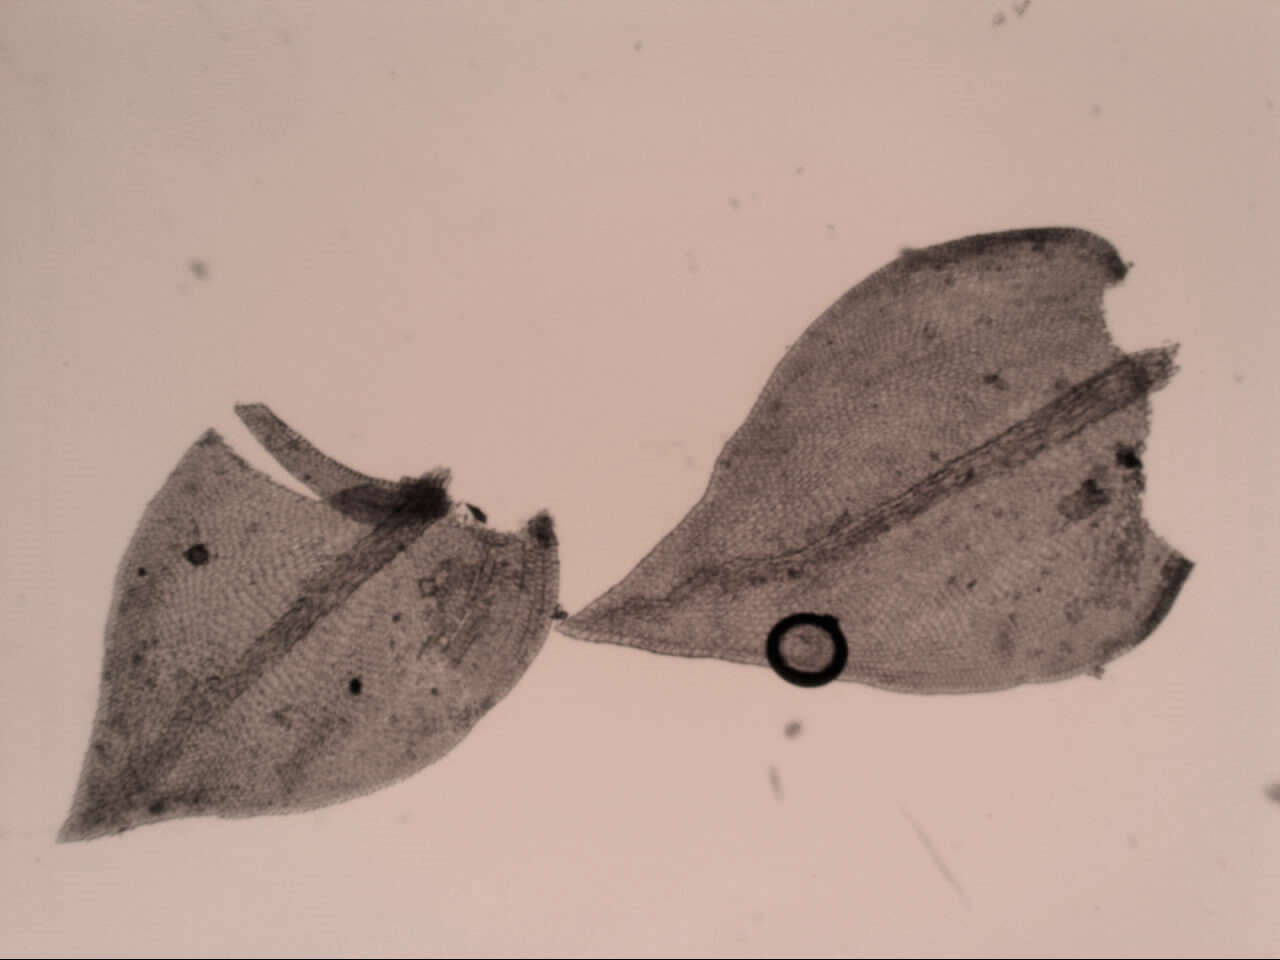 Image of Pseudoleskeopsis imbricata Thériot 1929